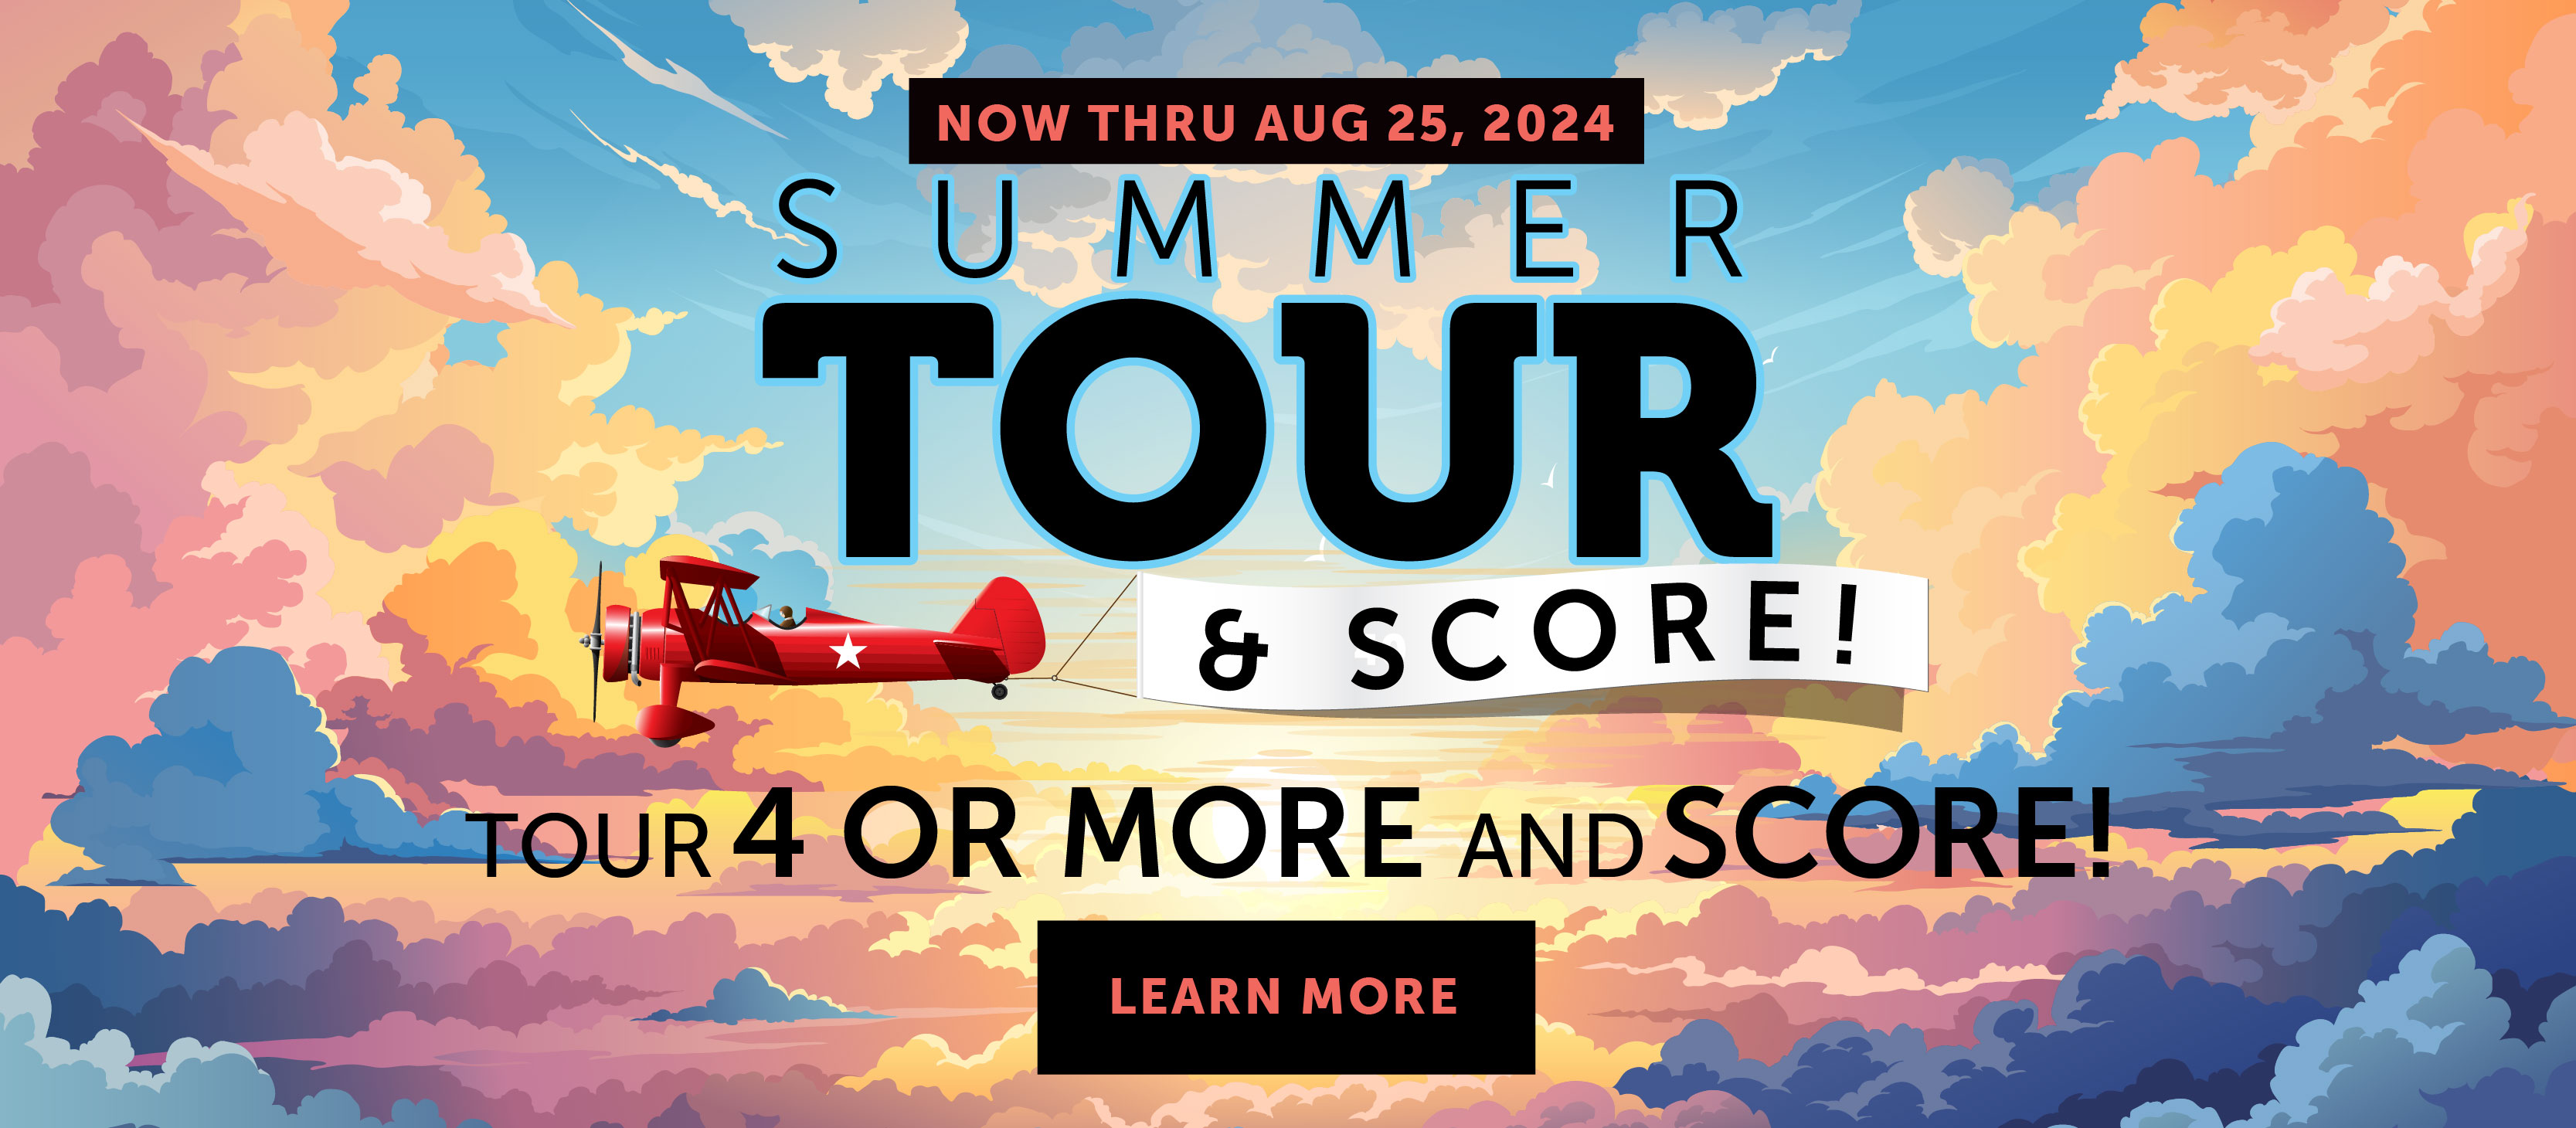 Summer Tour & Score